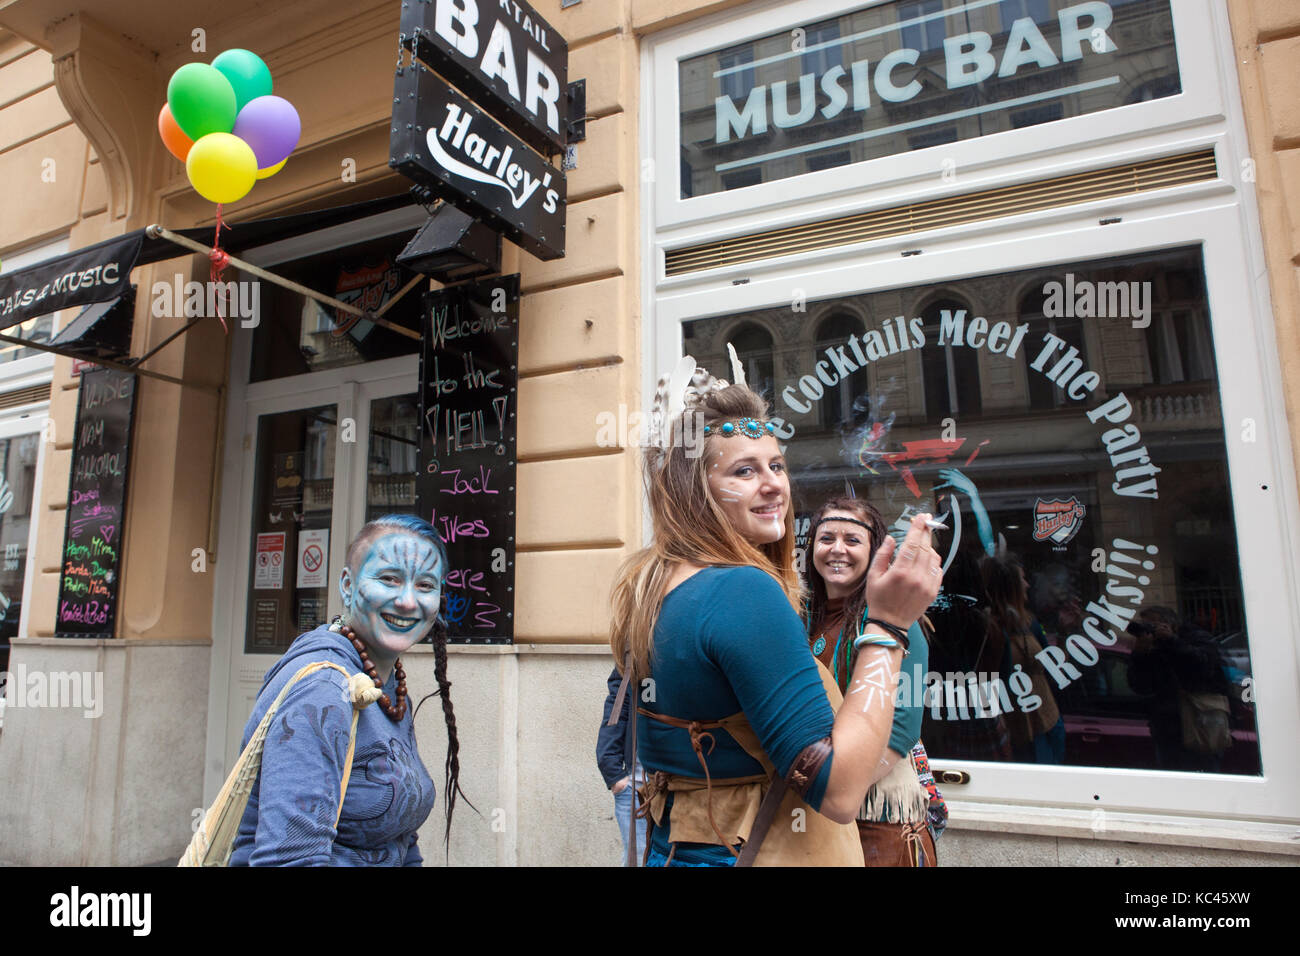 Young girls smoking cigarettes in front of Harley's bar, music bar at Dlouha street, Prague, Czech Republic girls Stock Photo